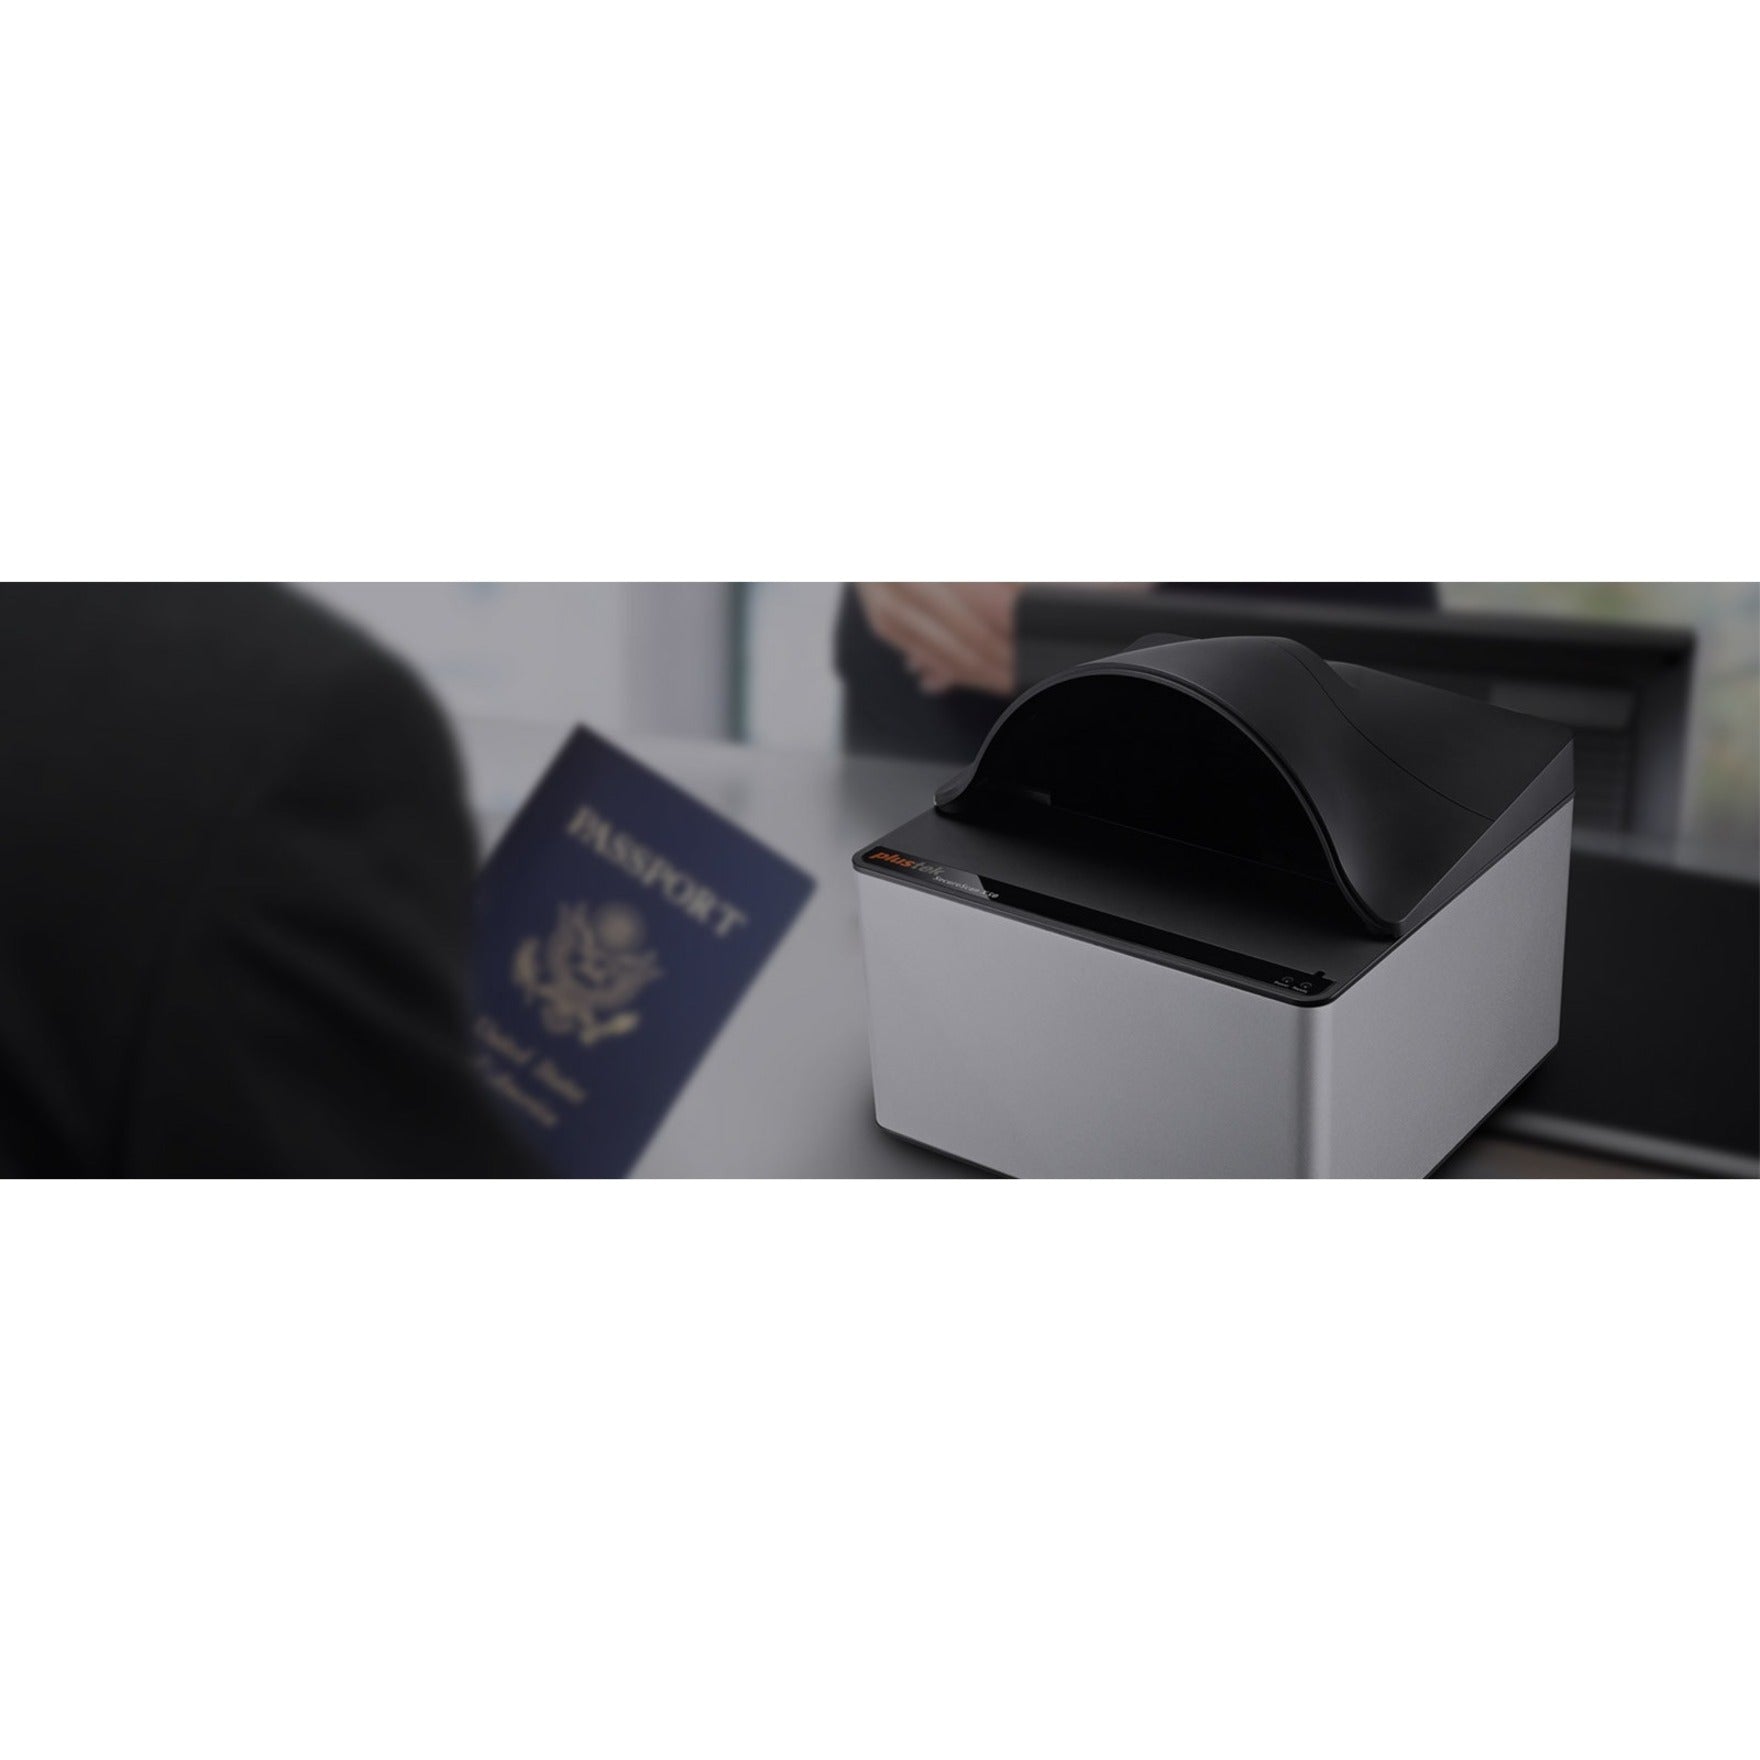 Plustek SECURESCANX50 SecureScan X50 Passport Scanner, Sheetfed Scanner for Passport, ID Card, Driving License